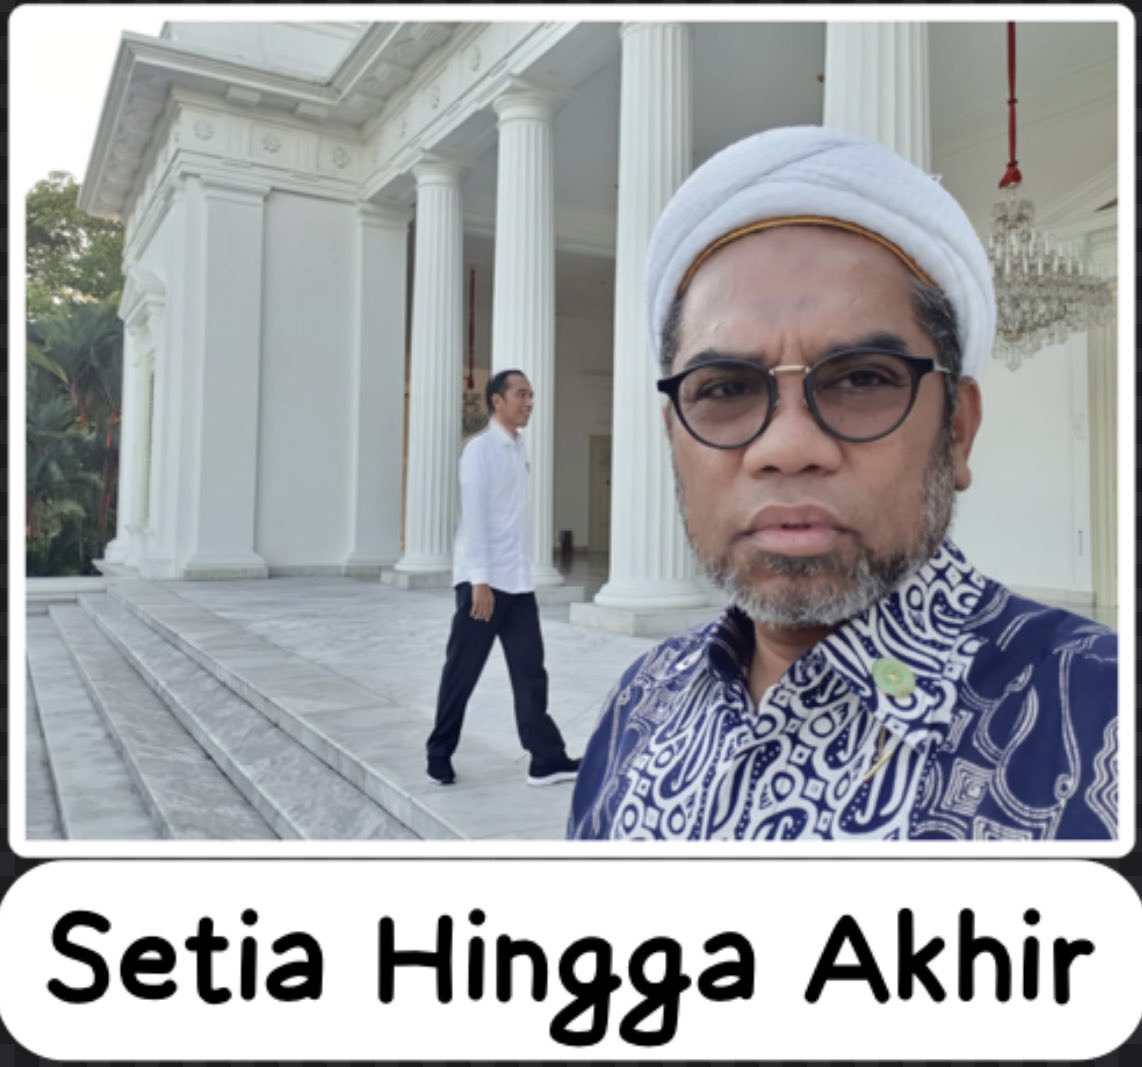 Menemani orang baik dan tulus di Ramadhan Mubarraq. #IndonesiaHebat